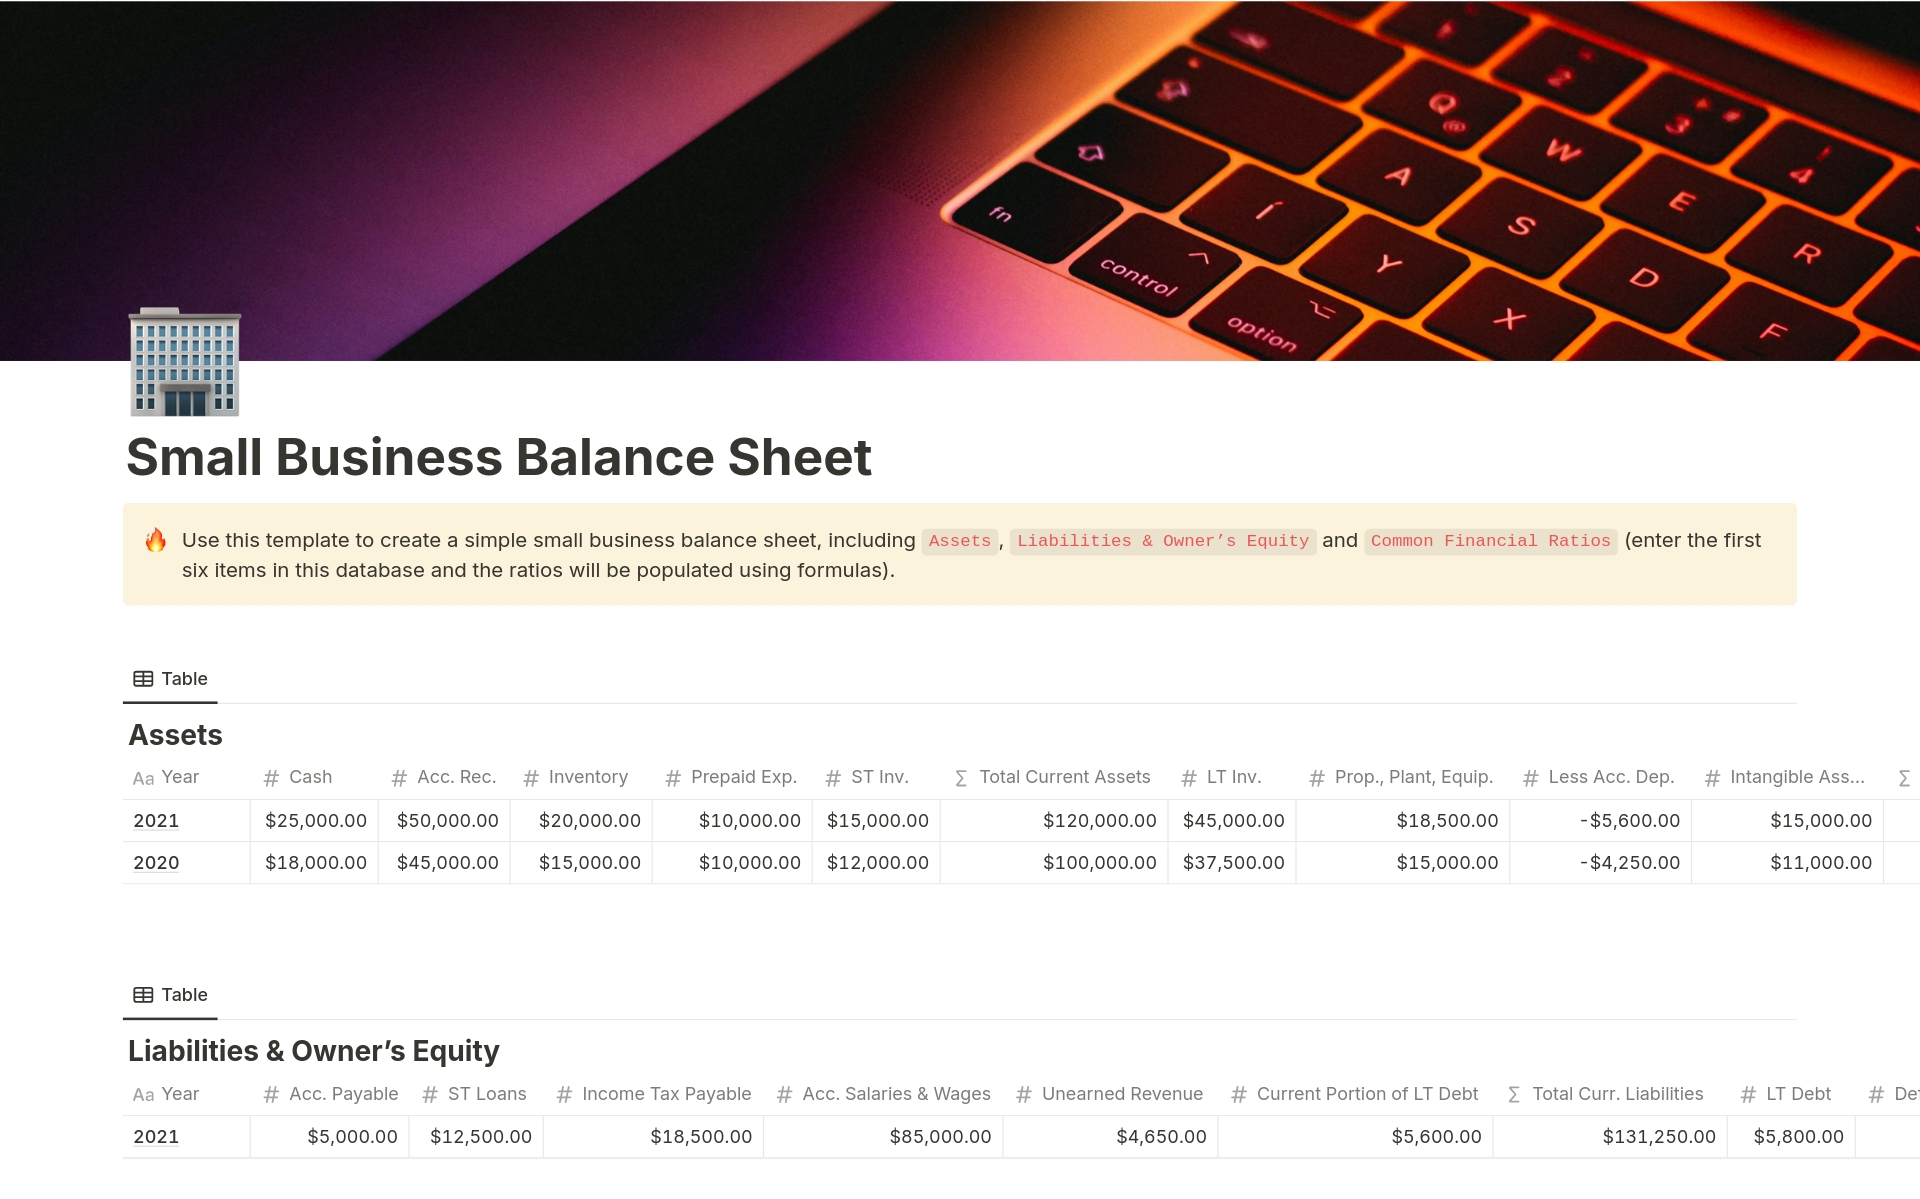 Aperçu du modèle de Small Business Balance Sheet